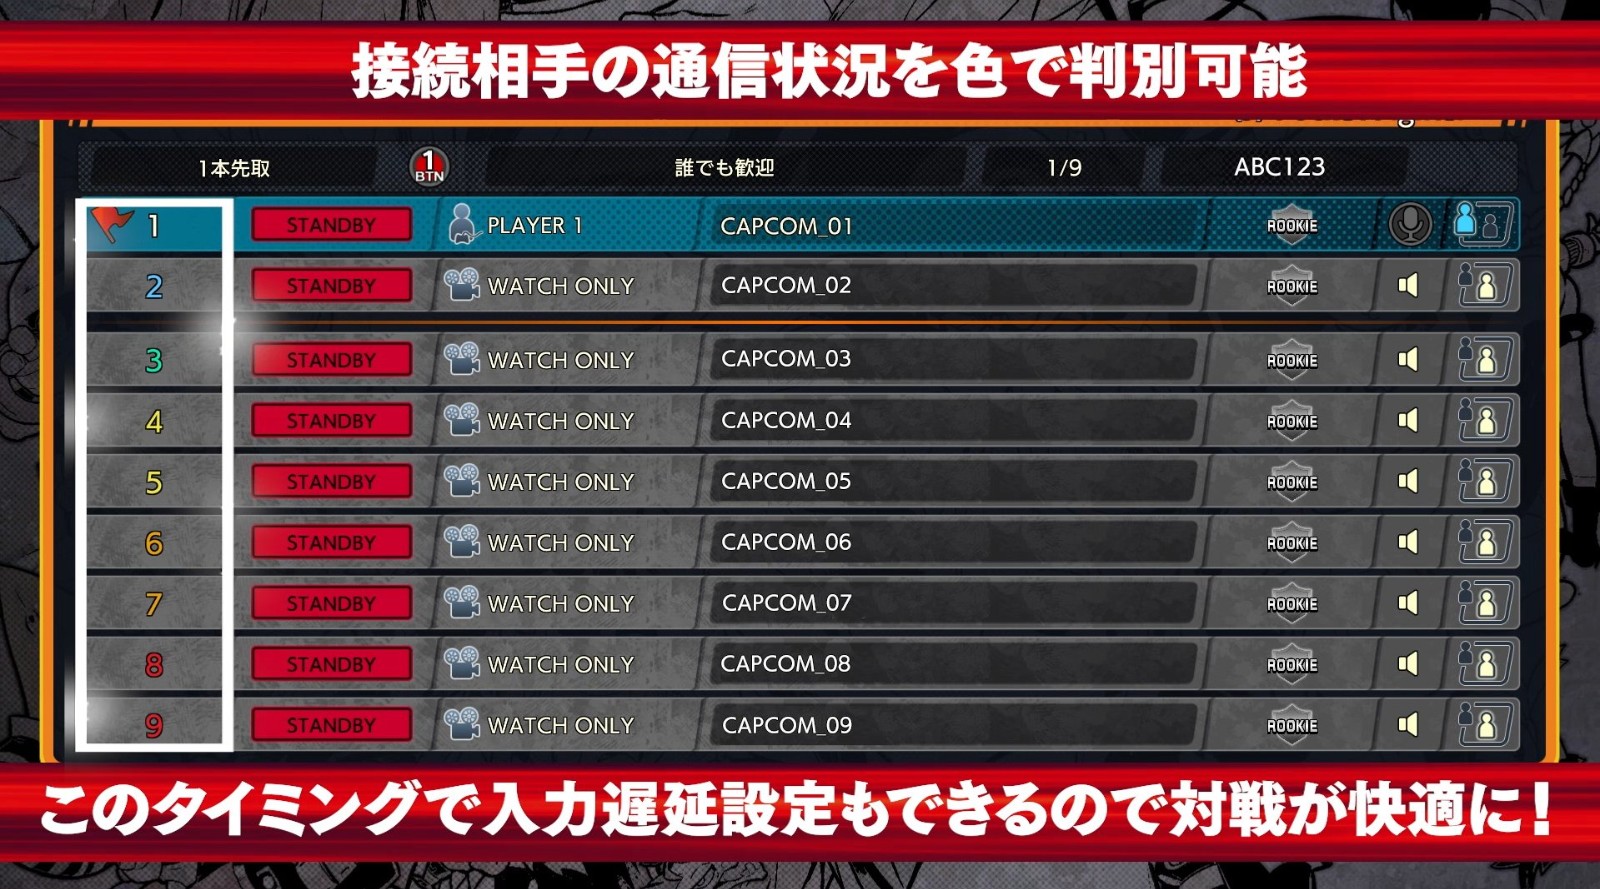 《CAPCOM對戰格鬥合集》免費更新9月27日上線 追加新內容